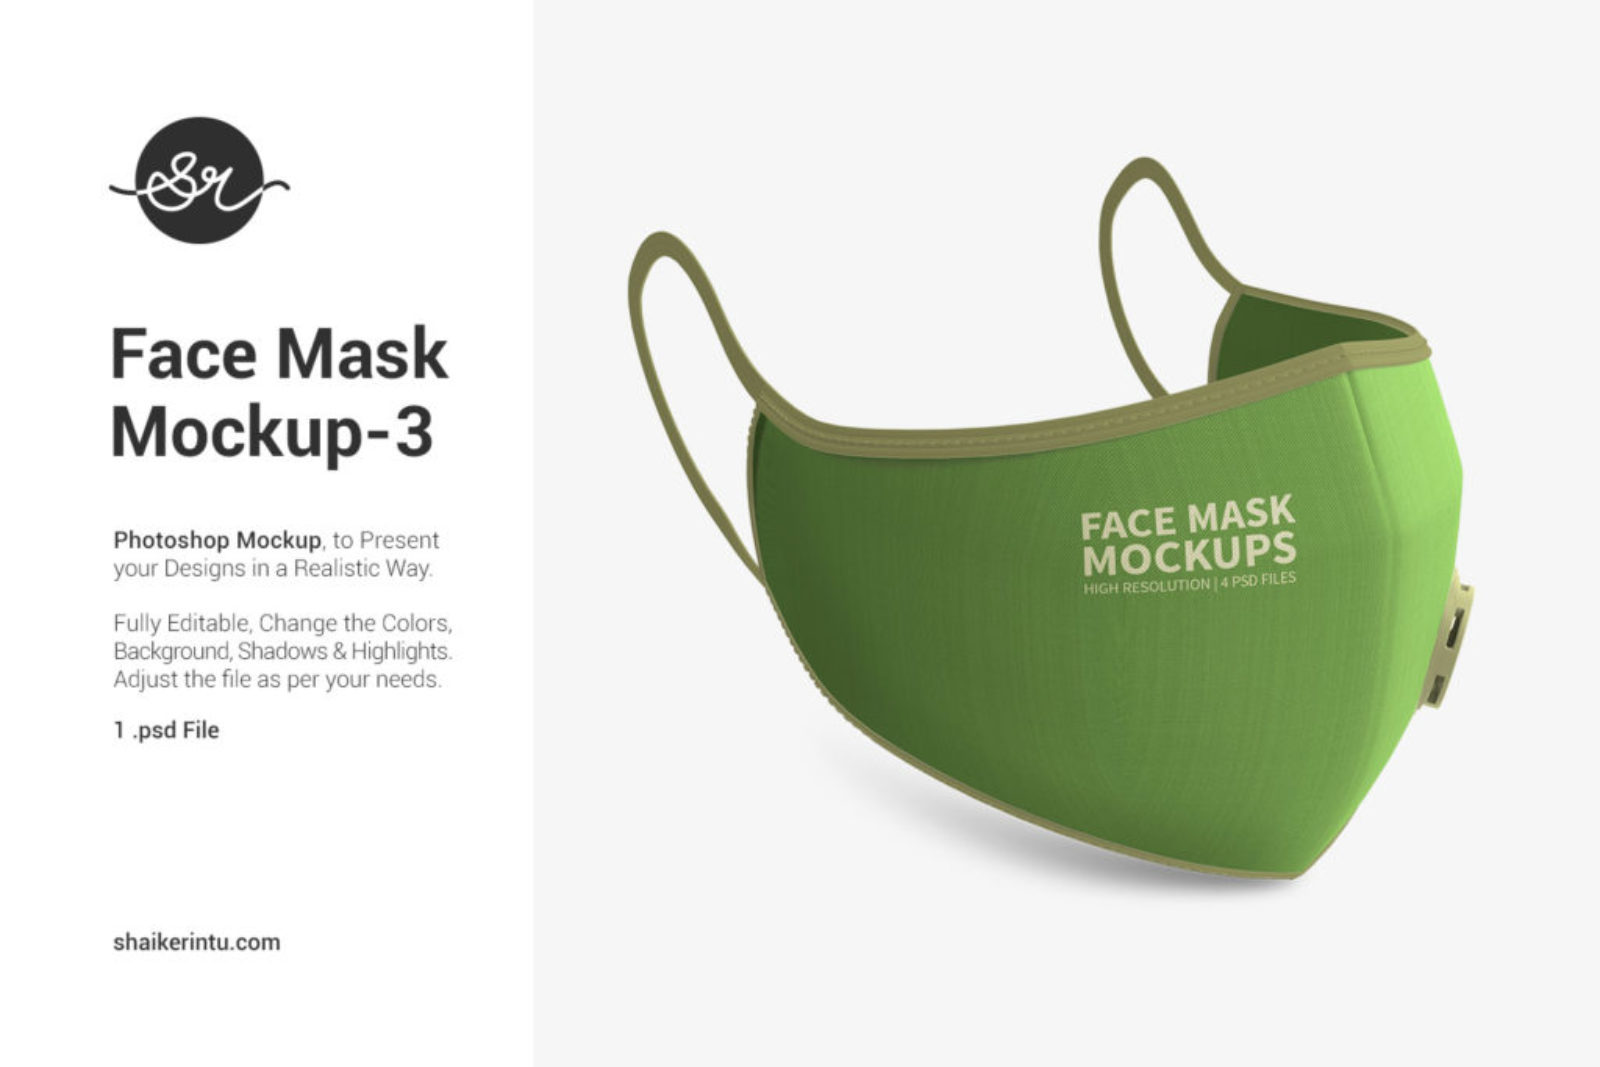 Face Mask mockup 3 | shaikerintu.com